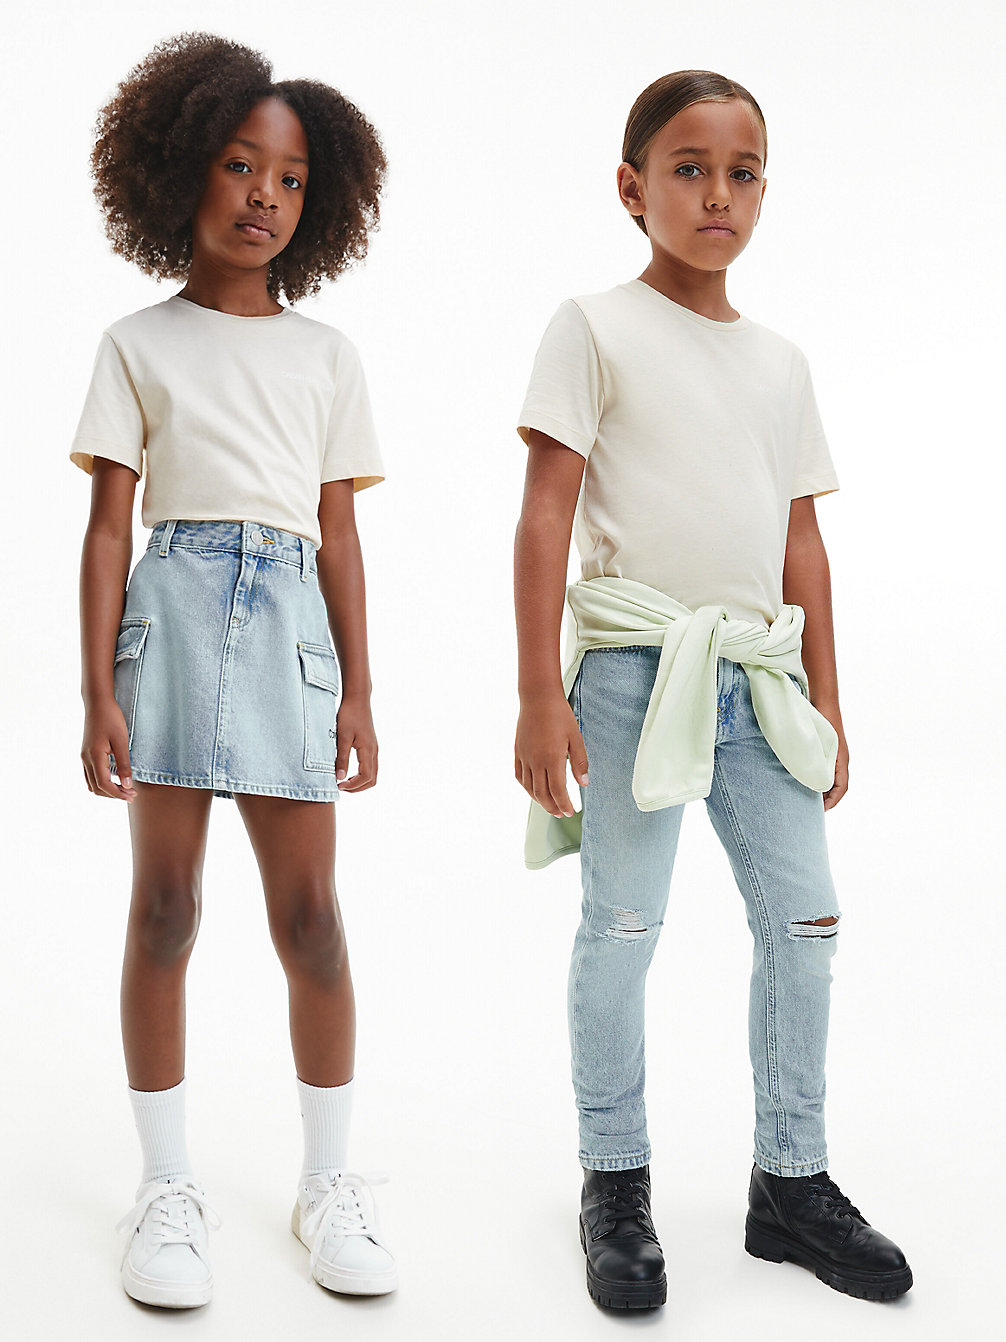 MUSLIN > Unisex T-Shirt Van Biologisch Katoen > undefined kids unisex - Calvin Klein